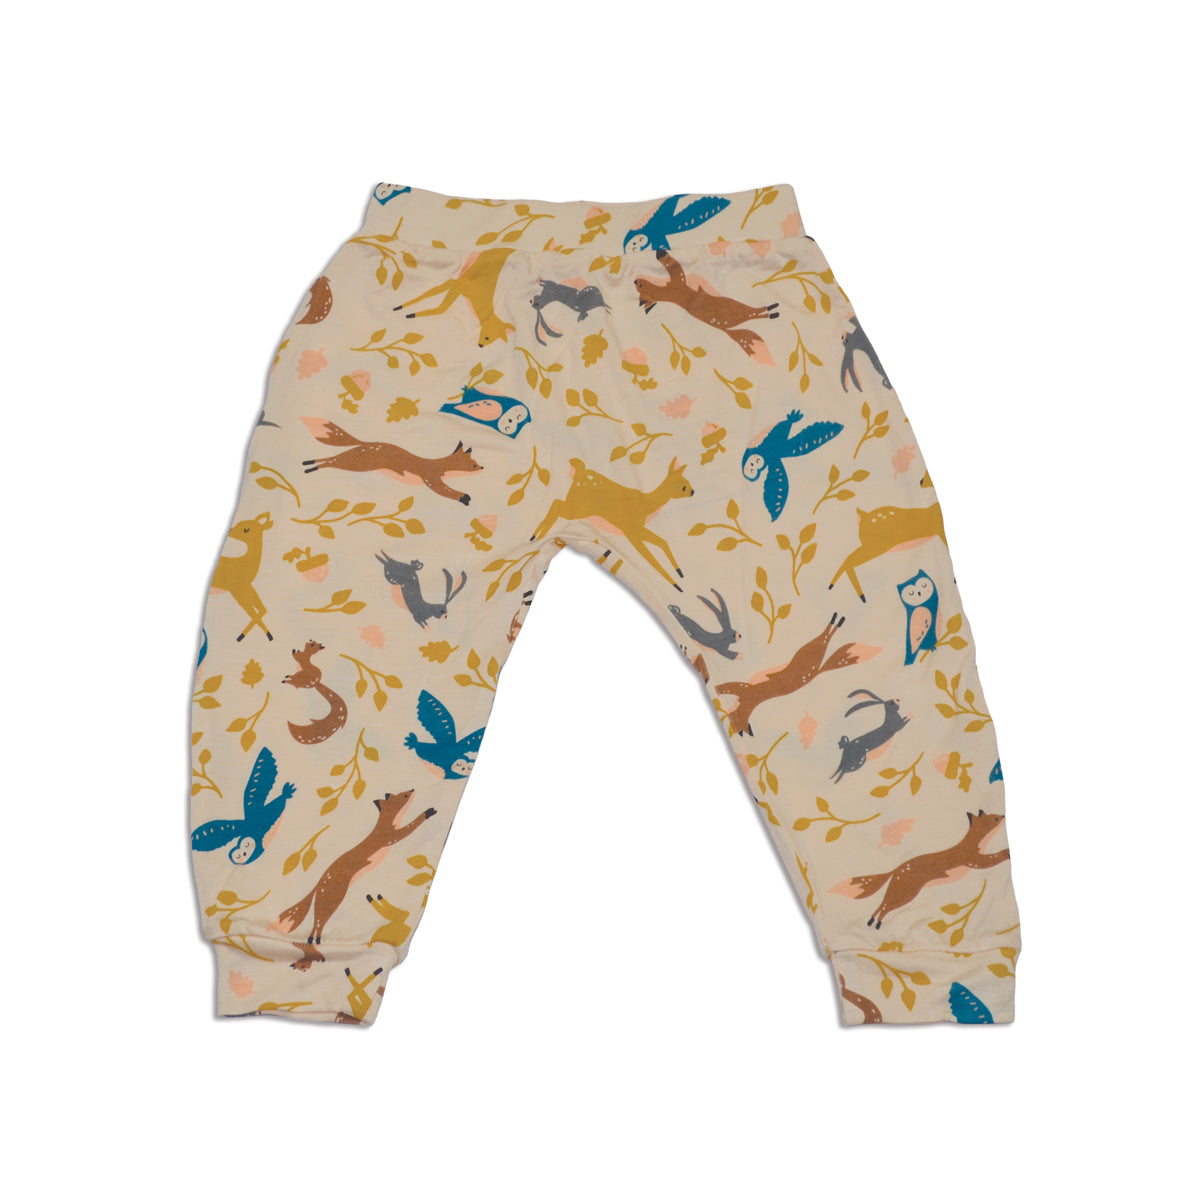 Harem pants sewing pattern - Brindille & Twig